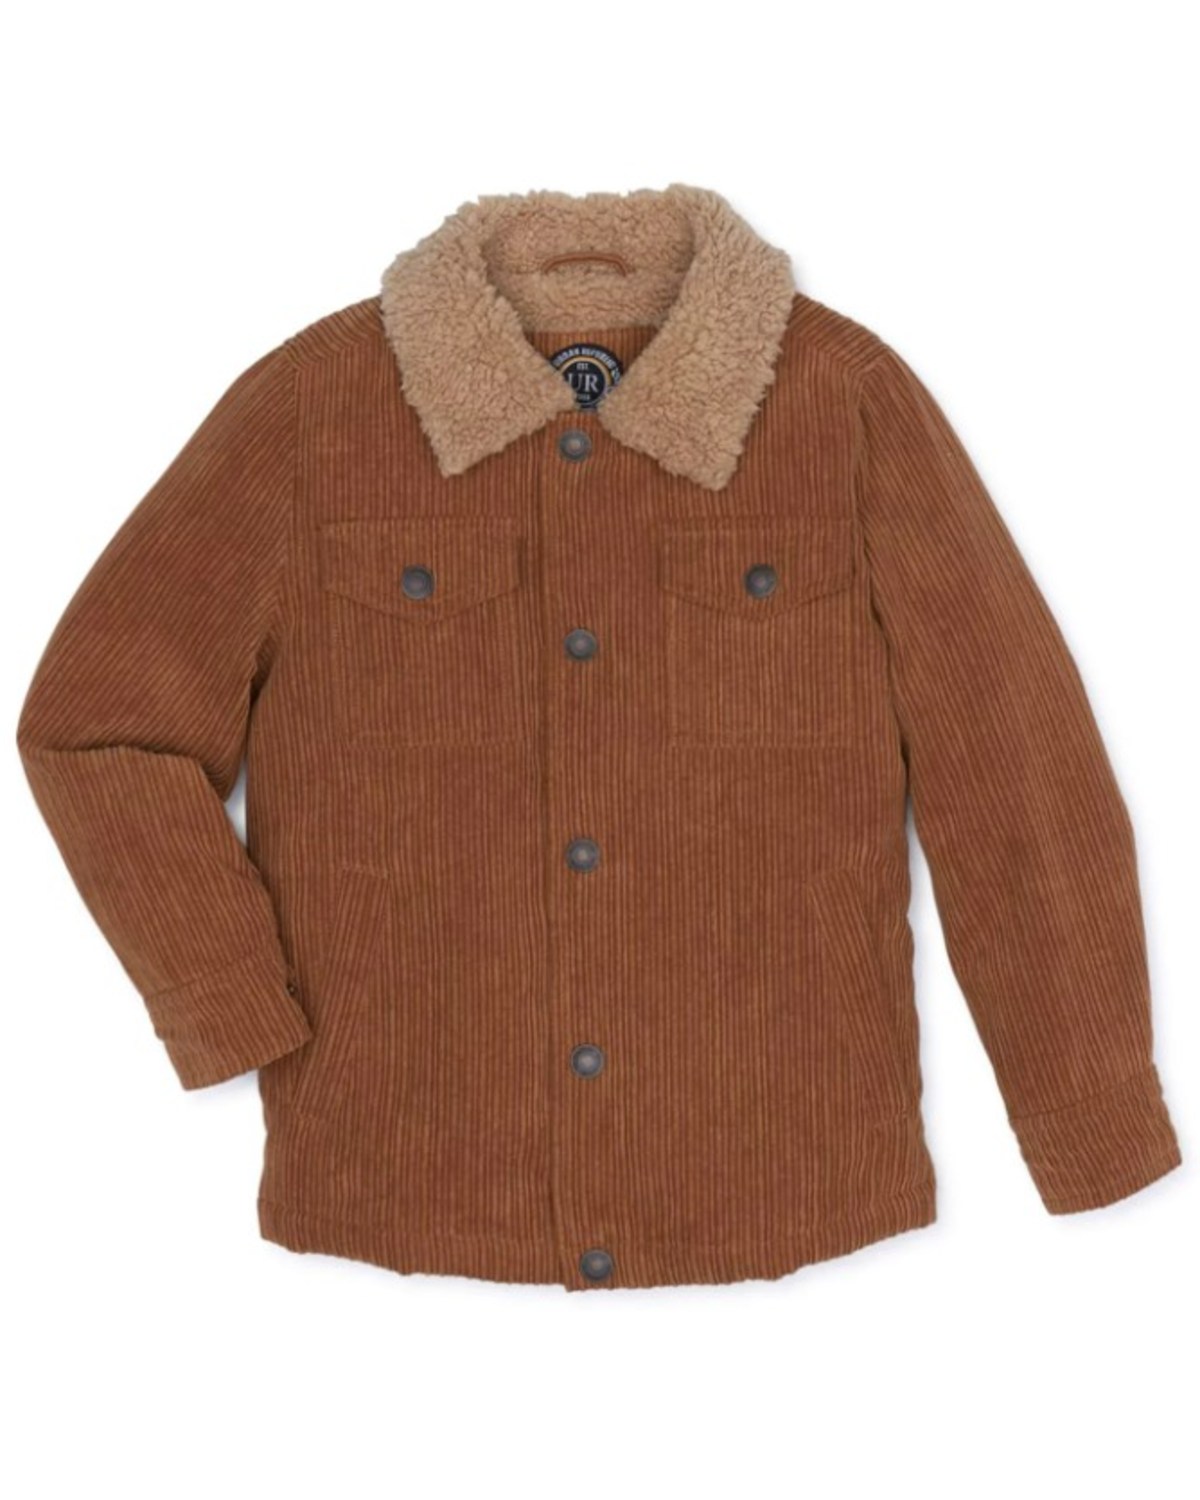 Urban Republic Toddler Boys' Sherpa Lined Corduroy Shirt Jacket